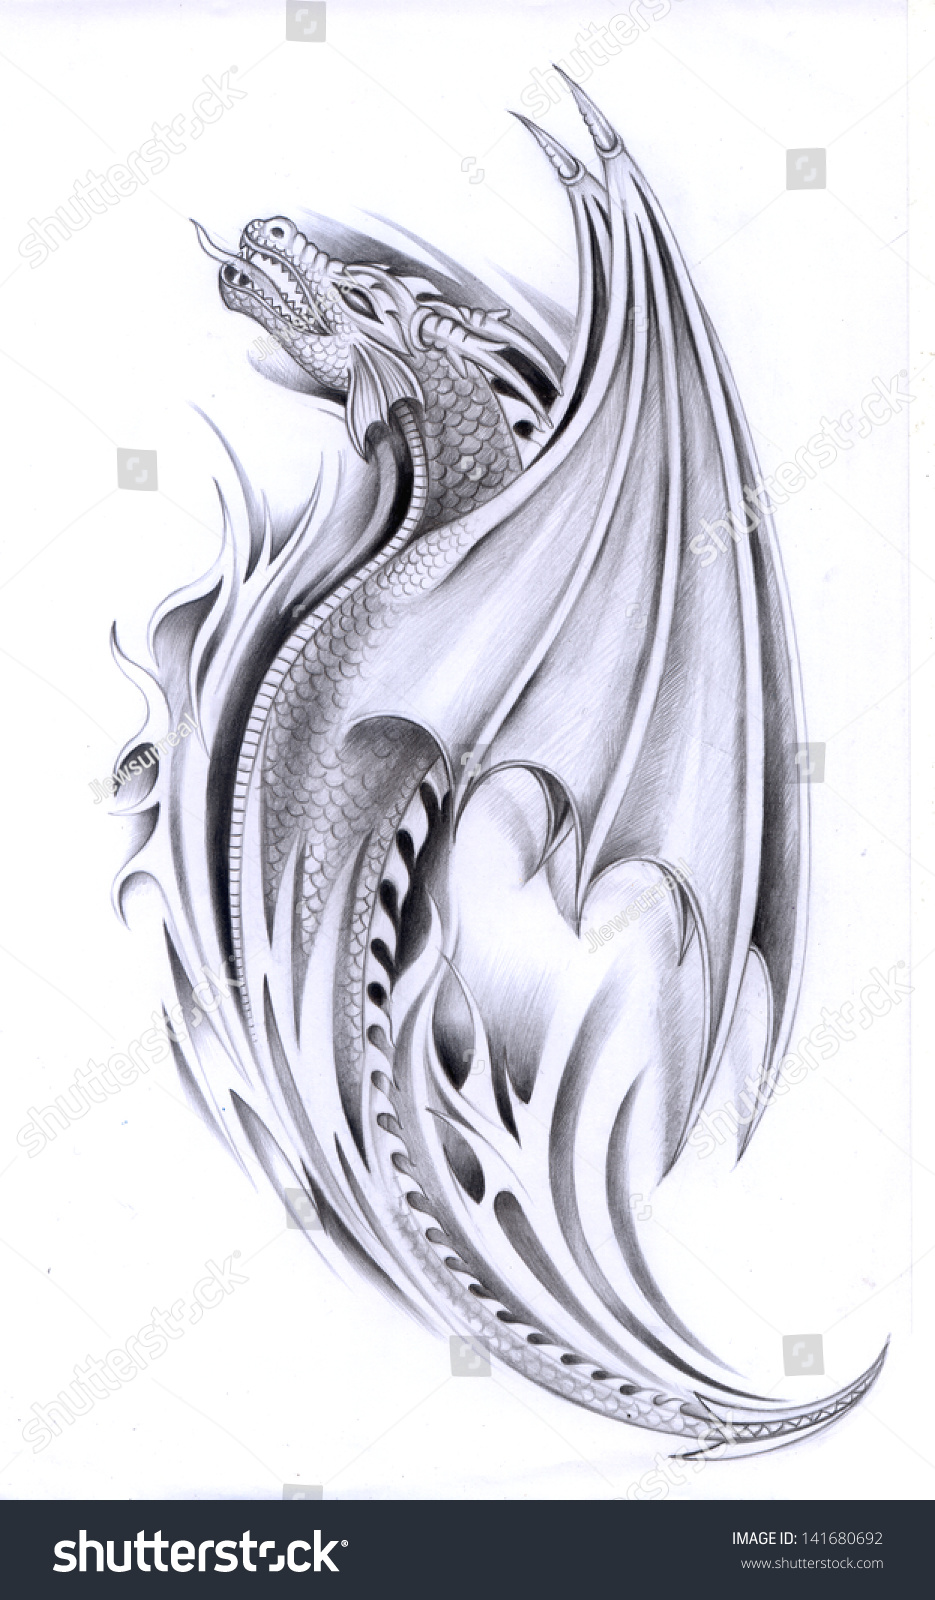 Art Dragon Tattoo Hand Drawing On Stock Illustration 141680692 ...